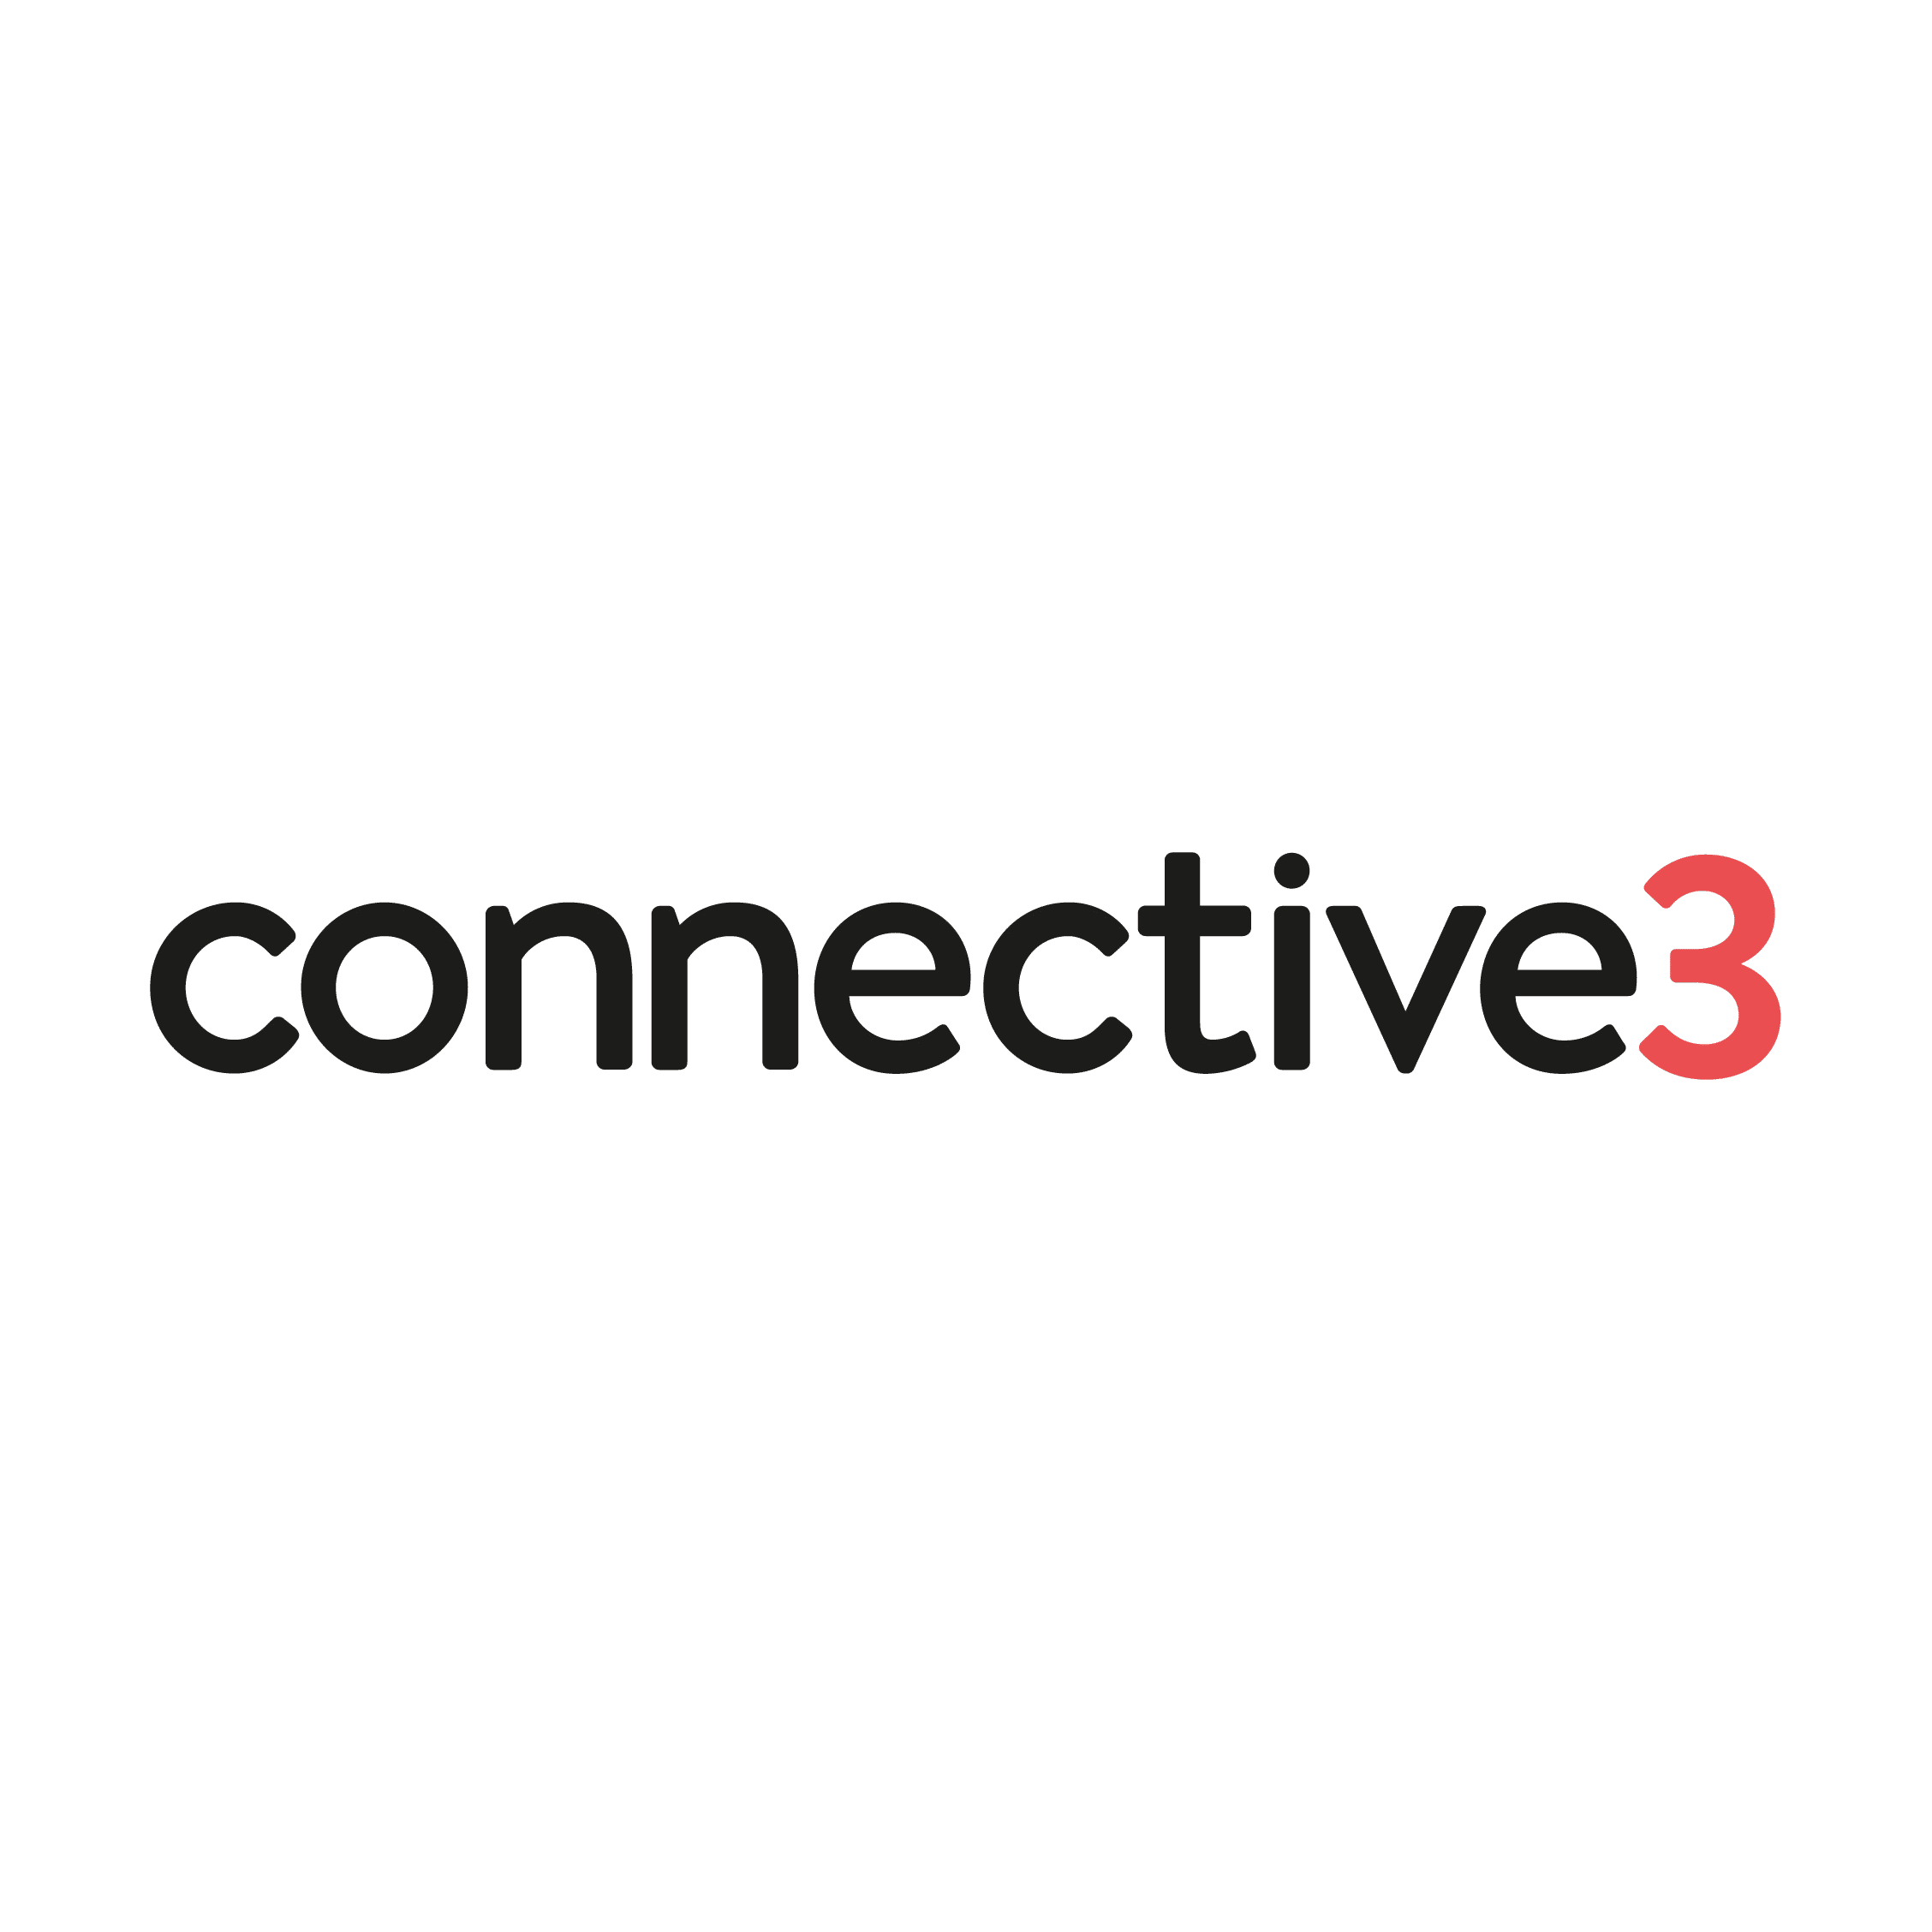 connective3-logo-rgb-square